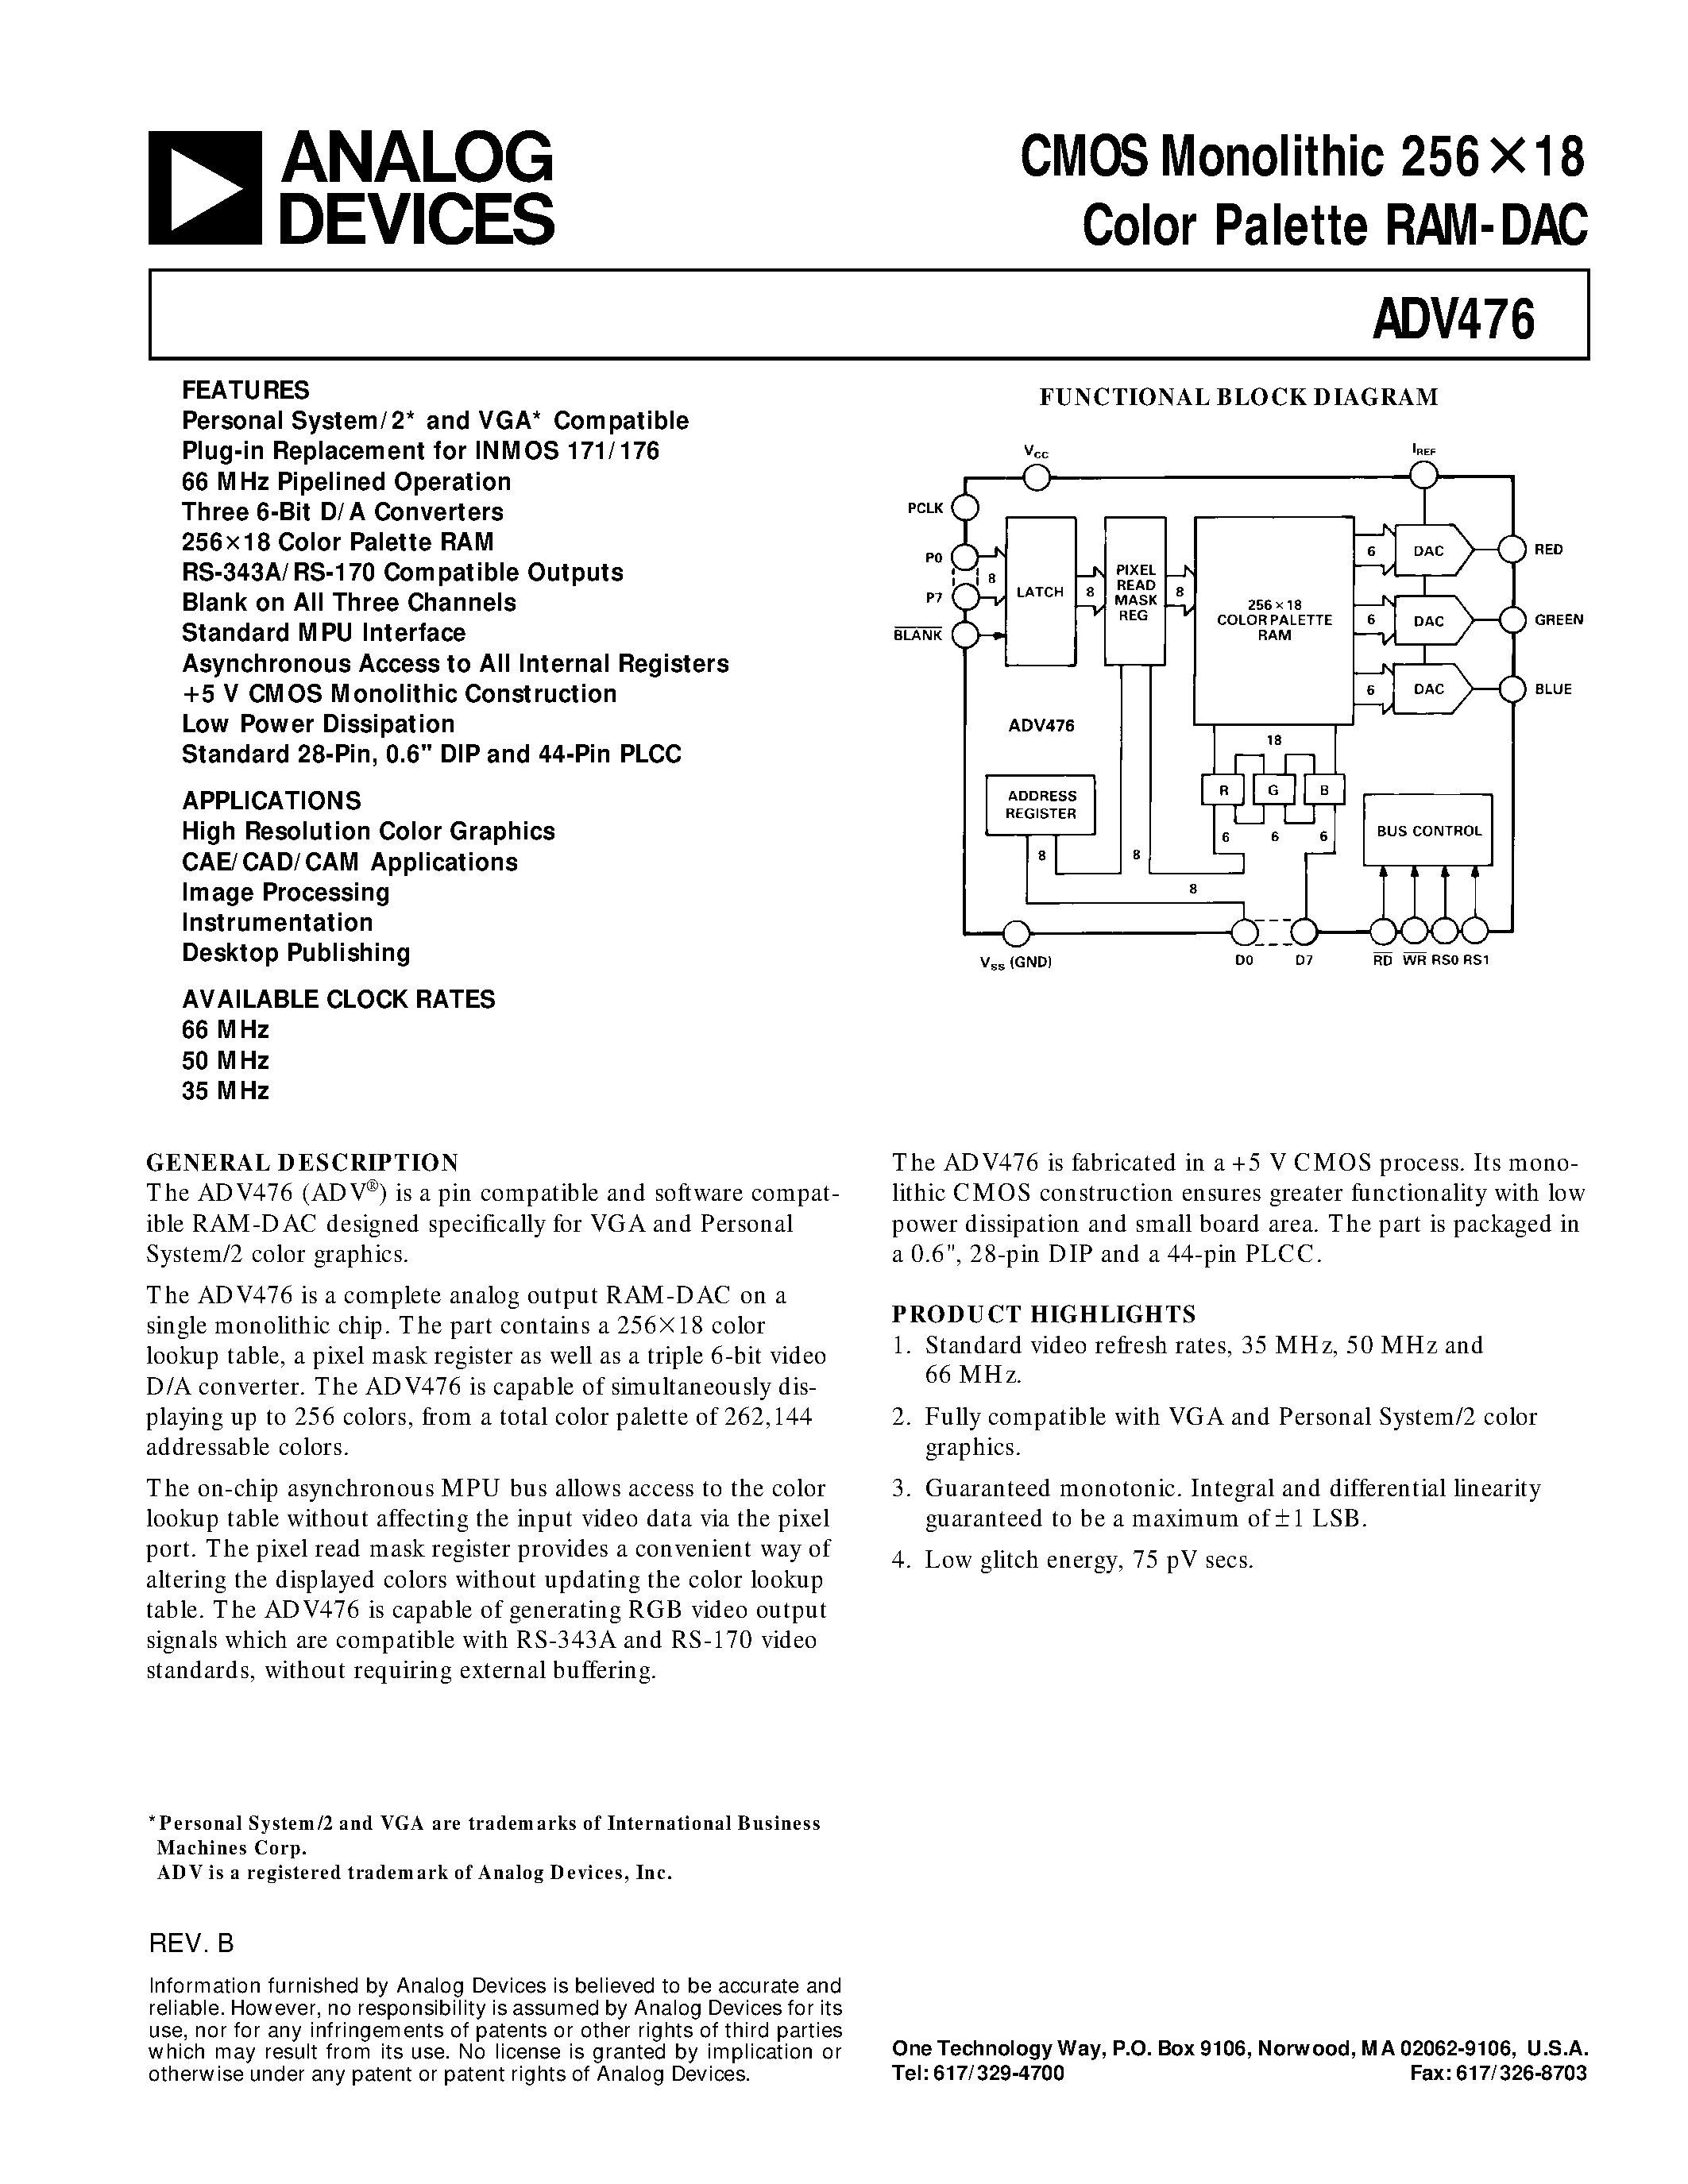 Datasheet ADV476KP35 - CMOS Monolithic 256x18 Color Palette RAM-DAC page 1